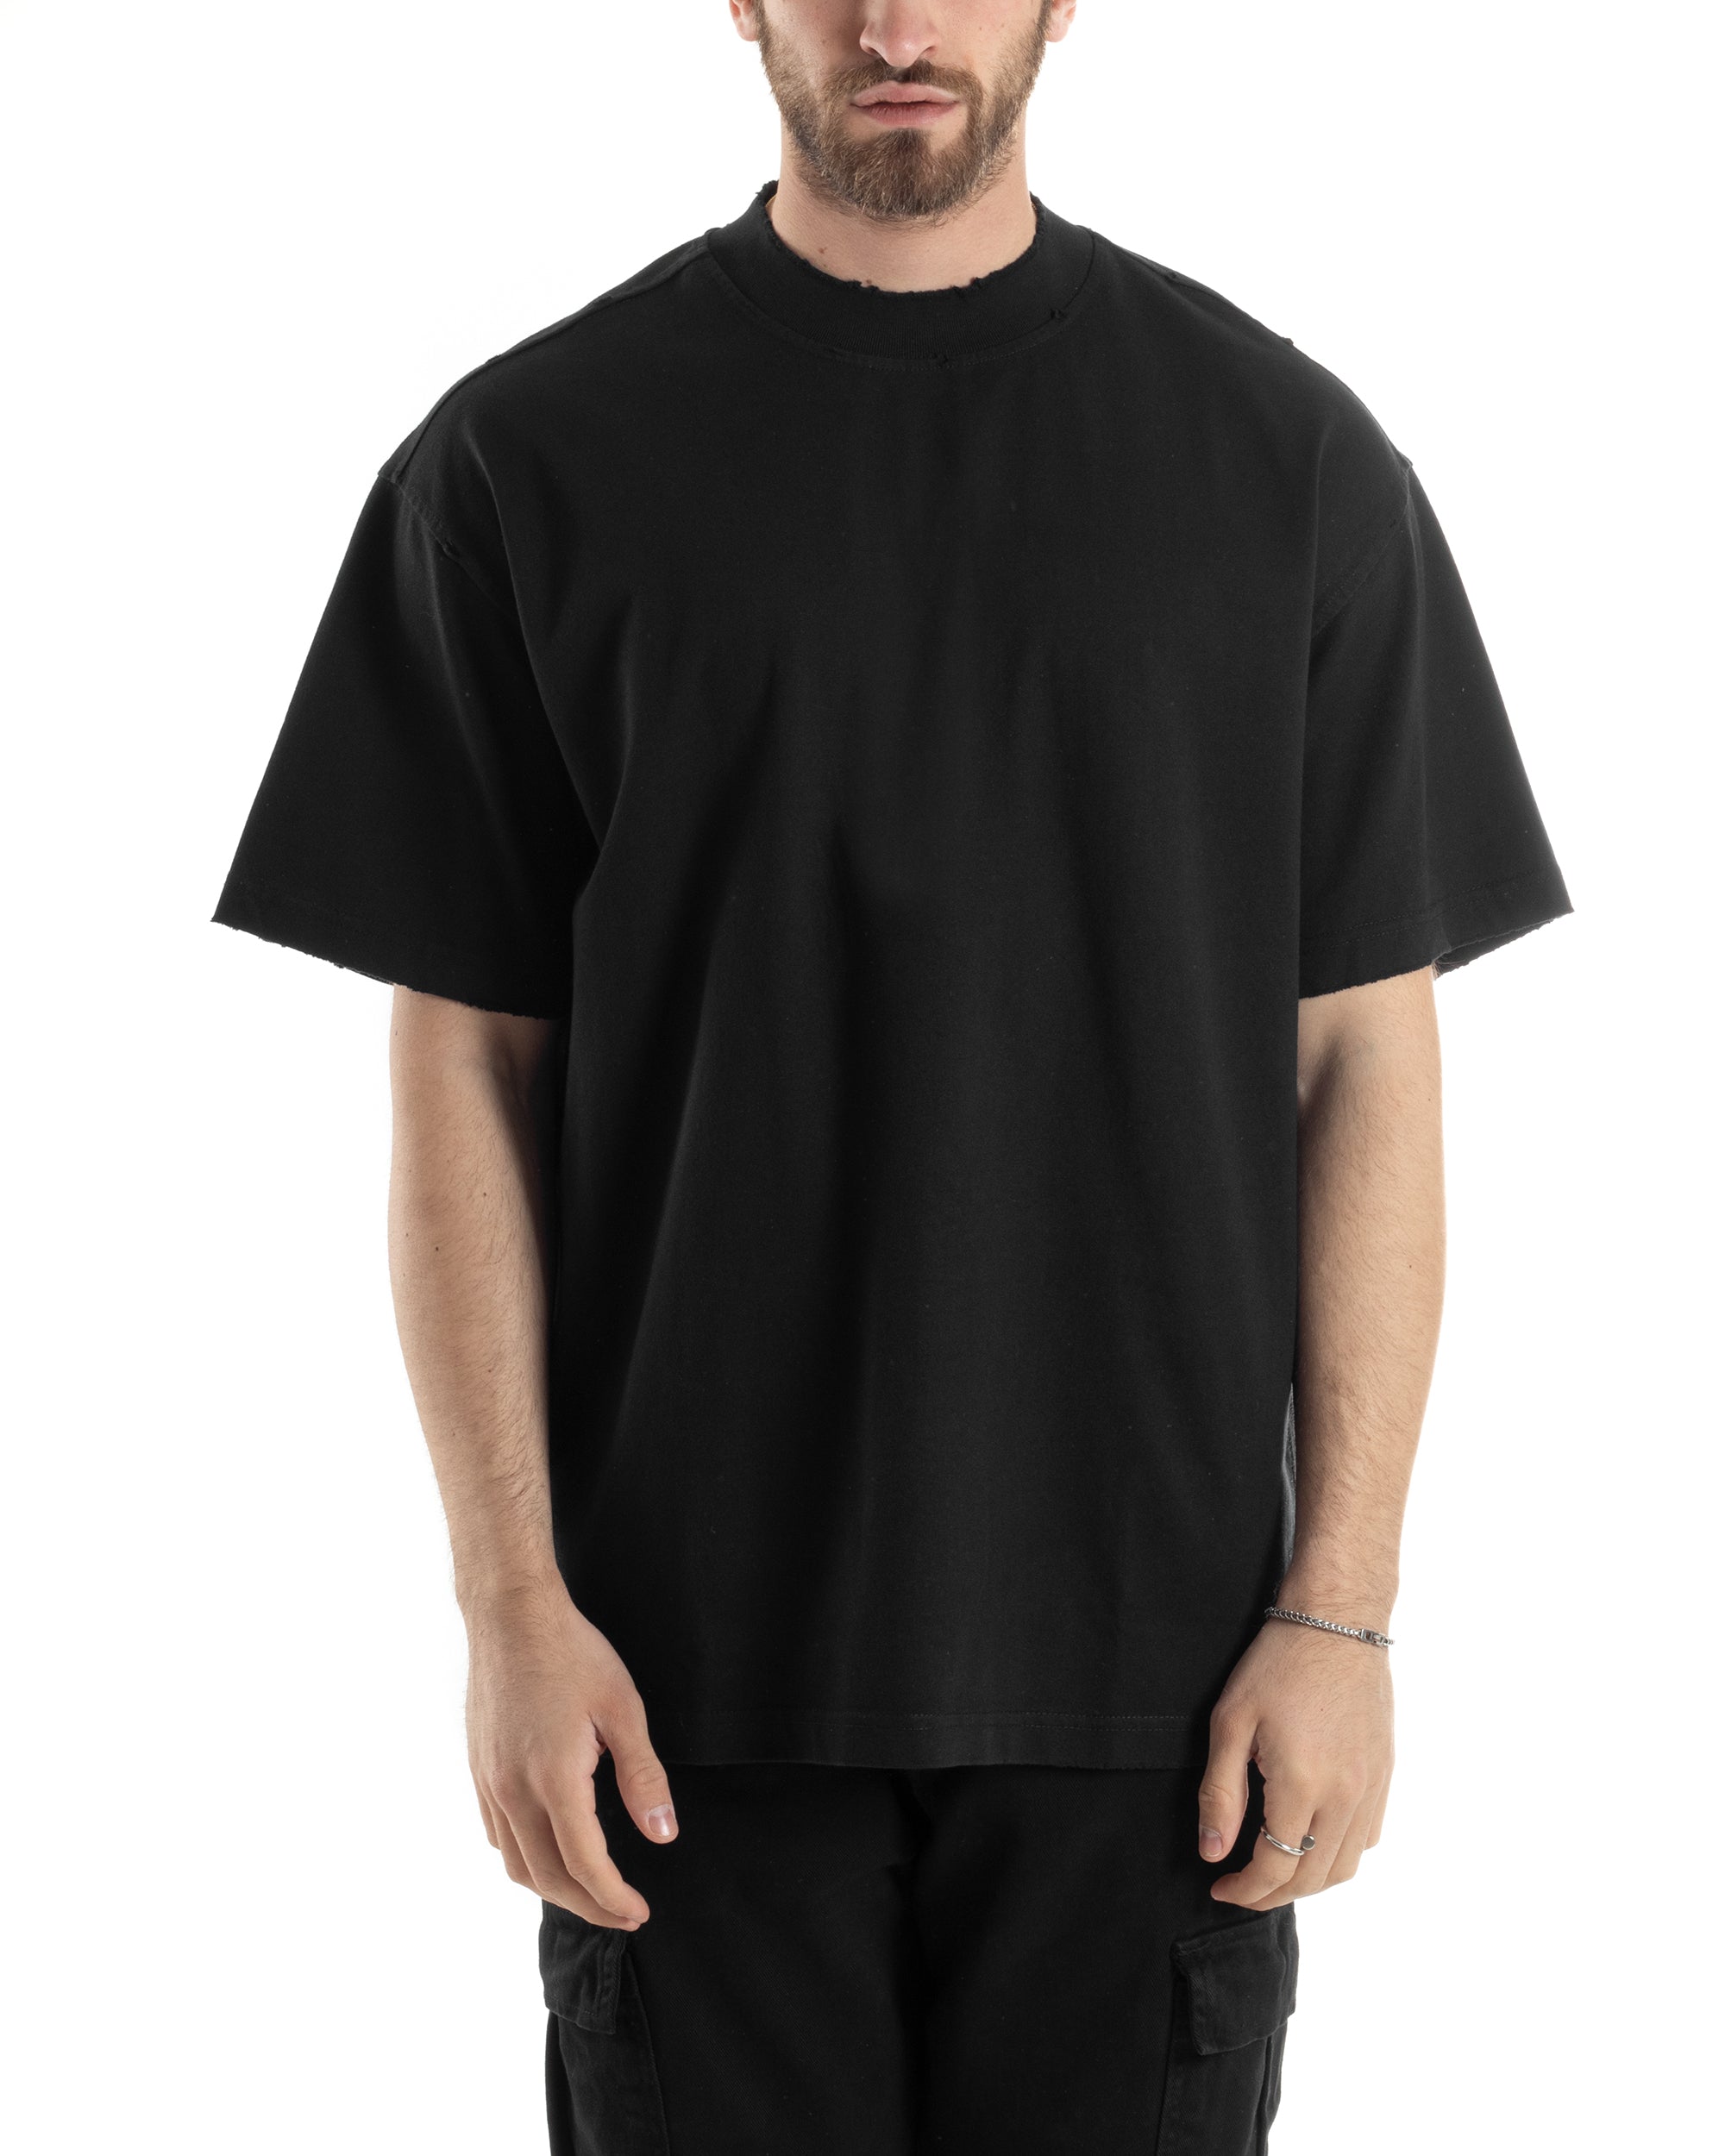 T-shirt Uomo Girocollo Boxy Fit Cotone Basic Con Rotture Relaxed Fit Gola Alta Nero GIOSAL-TS3016A